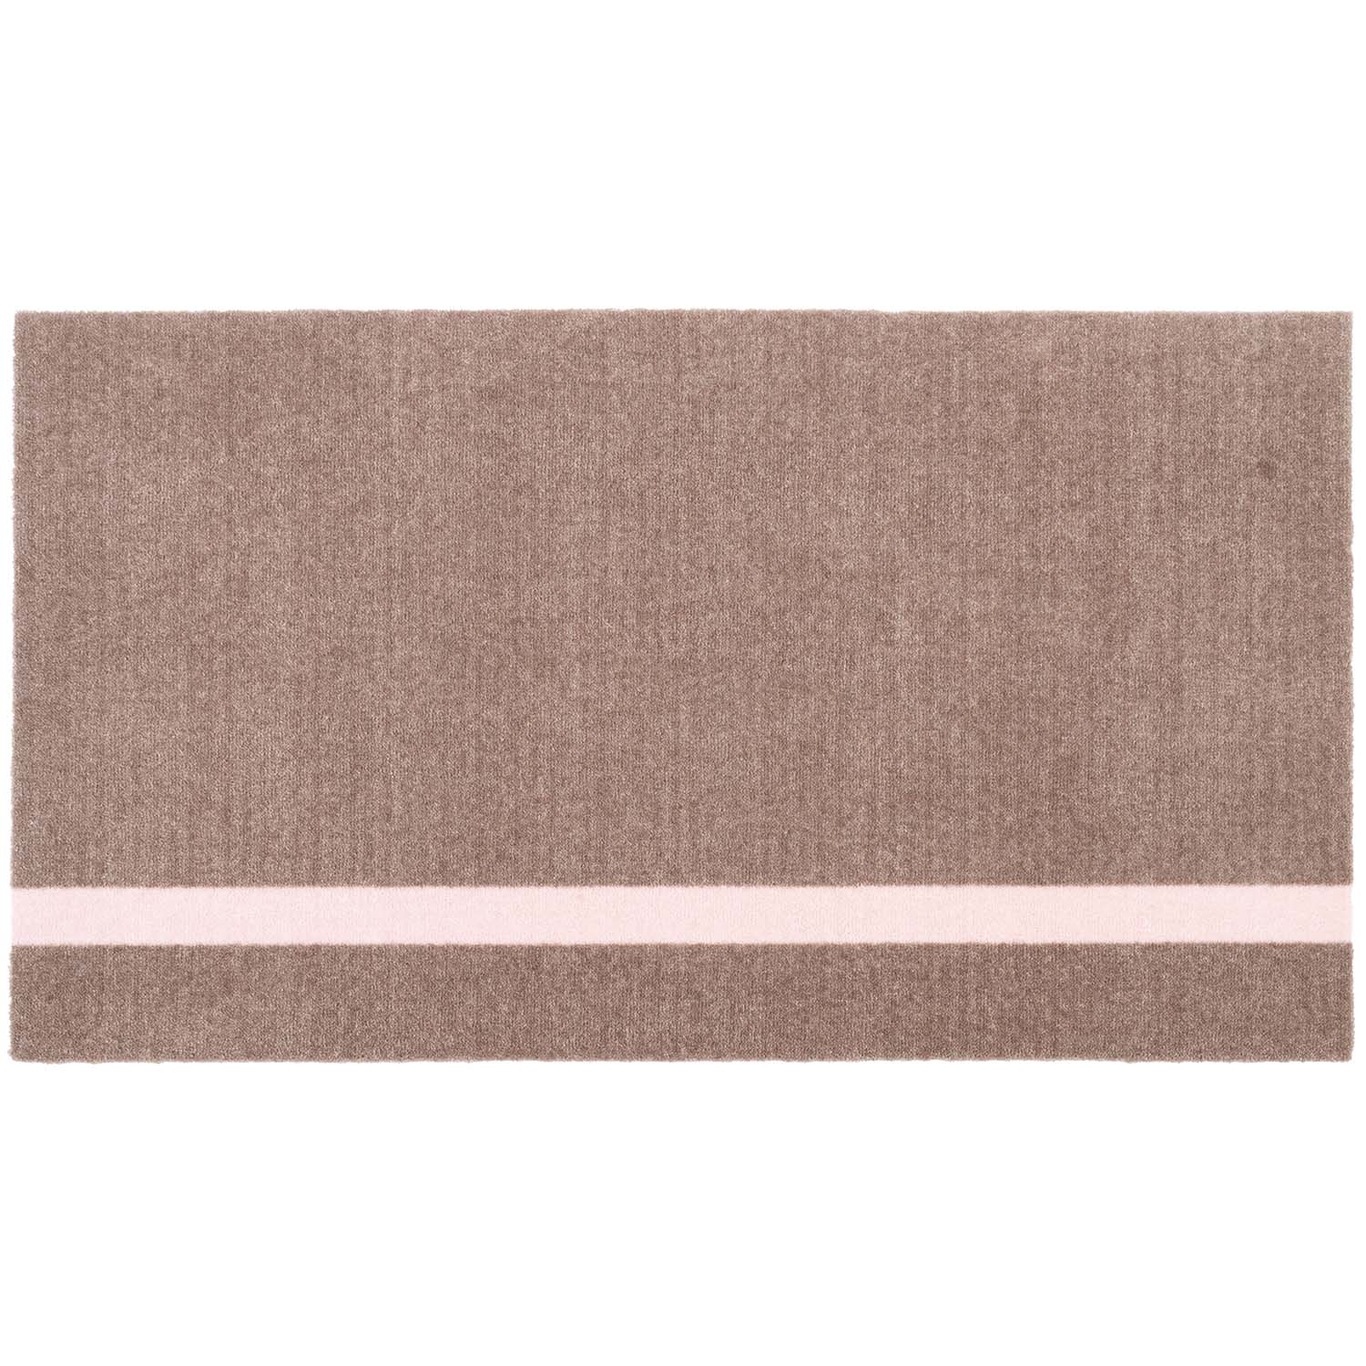 Stripes Teppich Vertikal Sandfarben/Light Rose, 67x120 cm